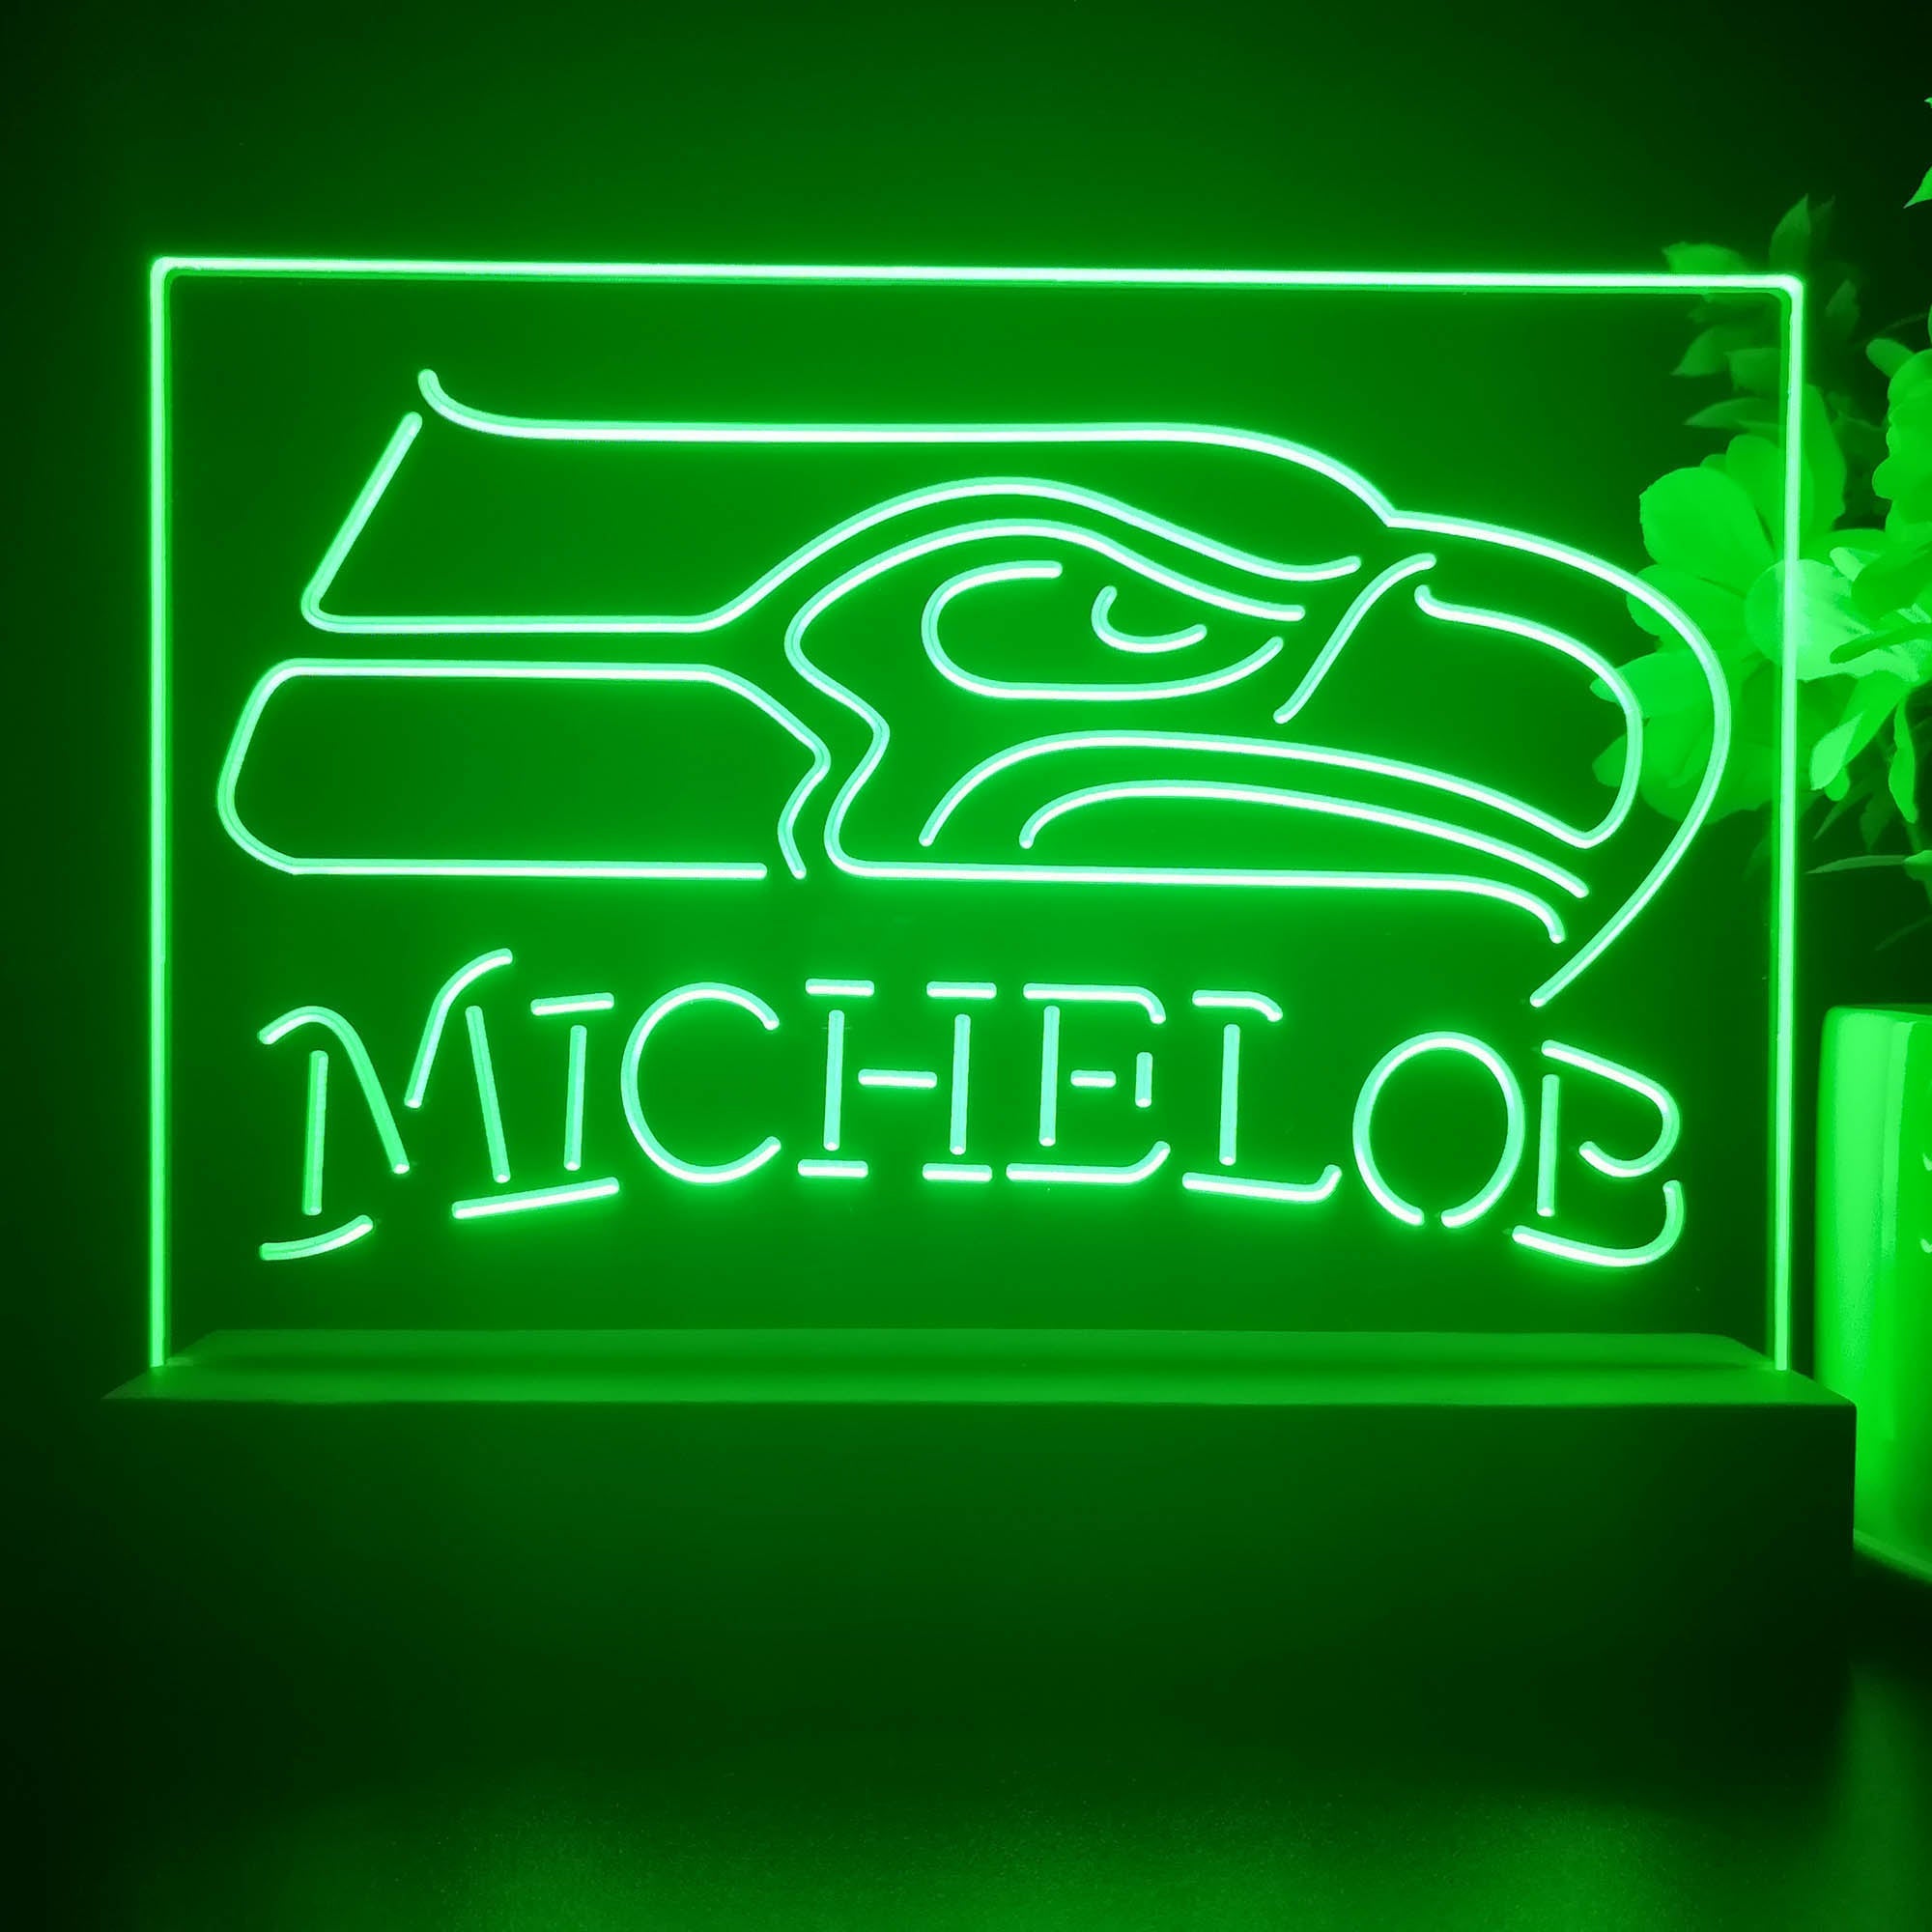 Michelob Bar Seattle Seahawks 3D Illusion Night Light Desk Lamp